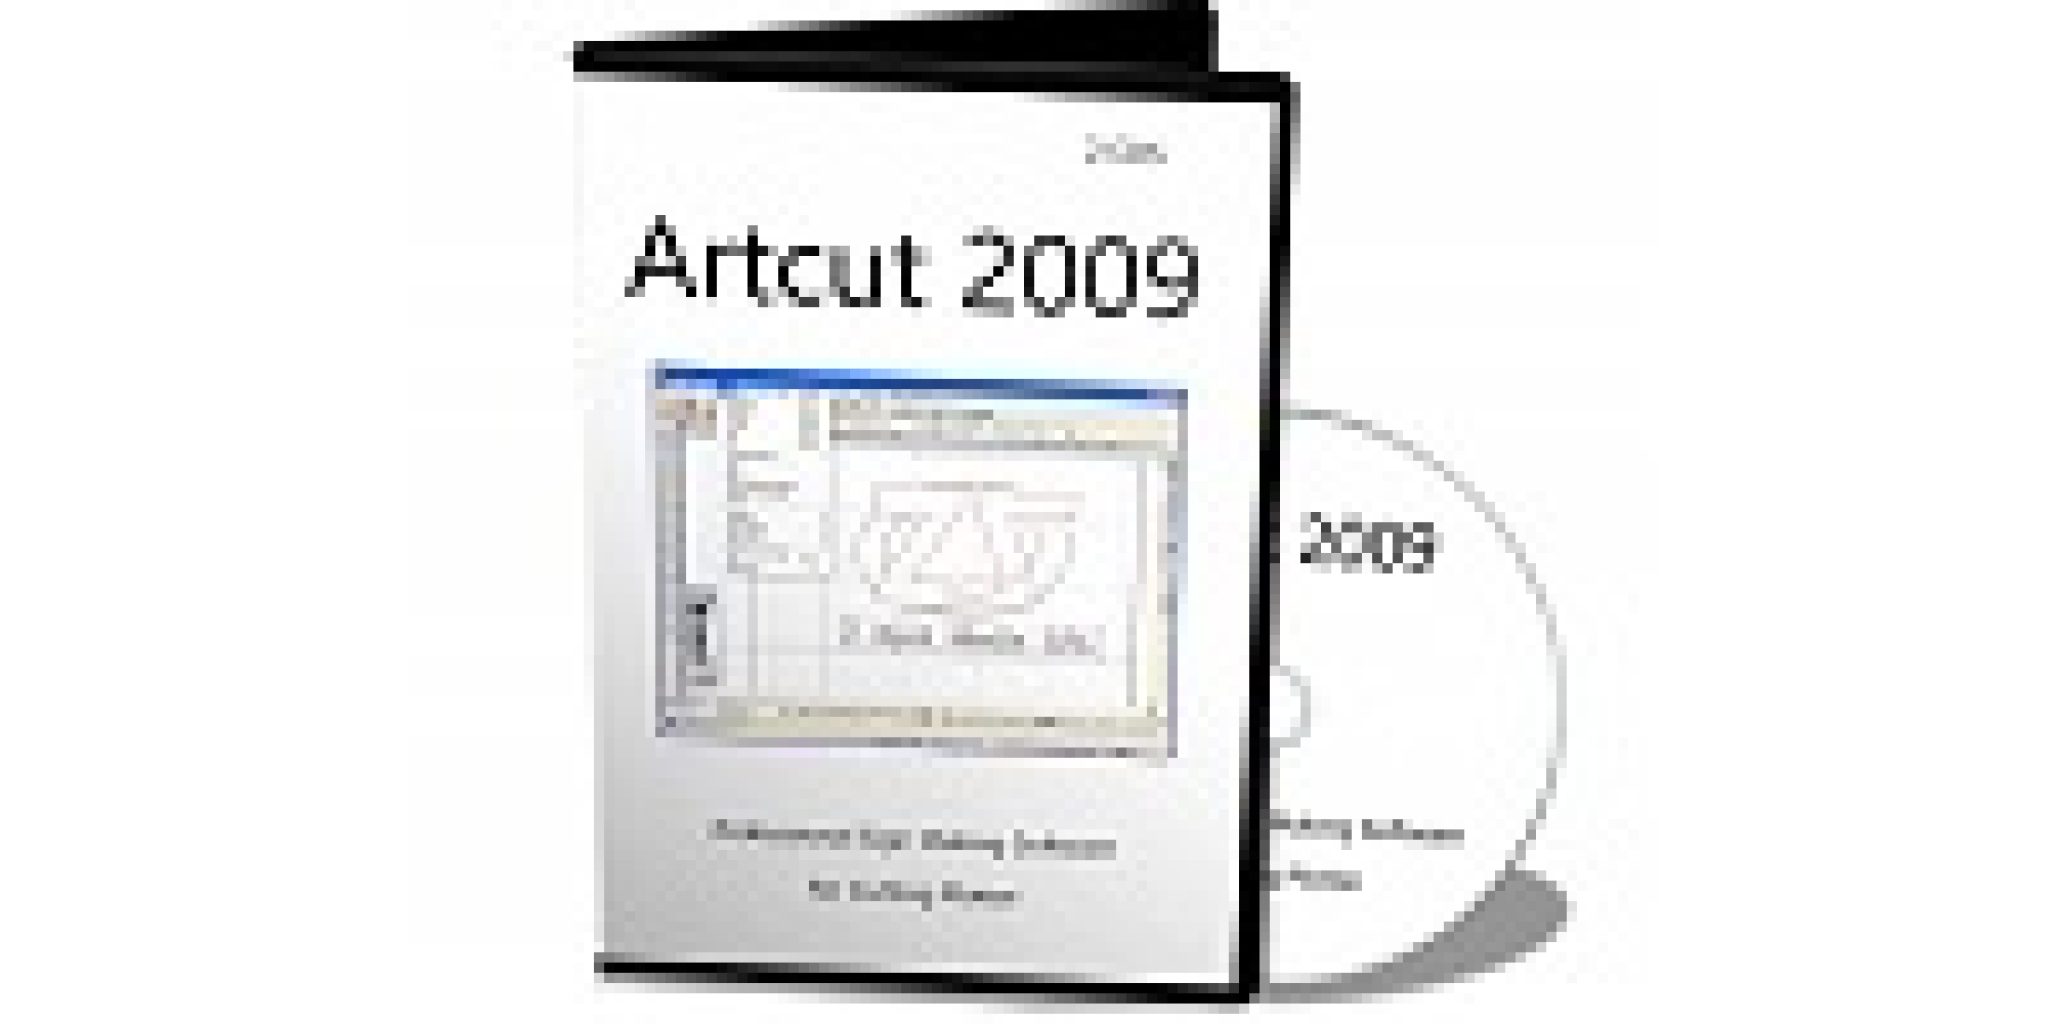 free download artcut software